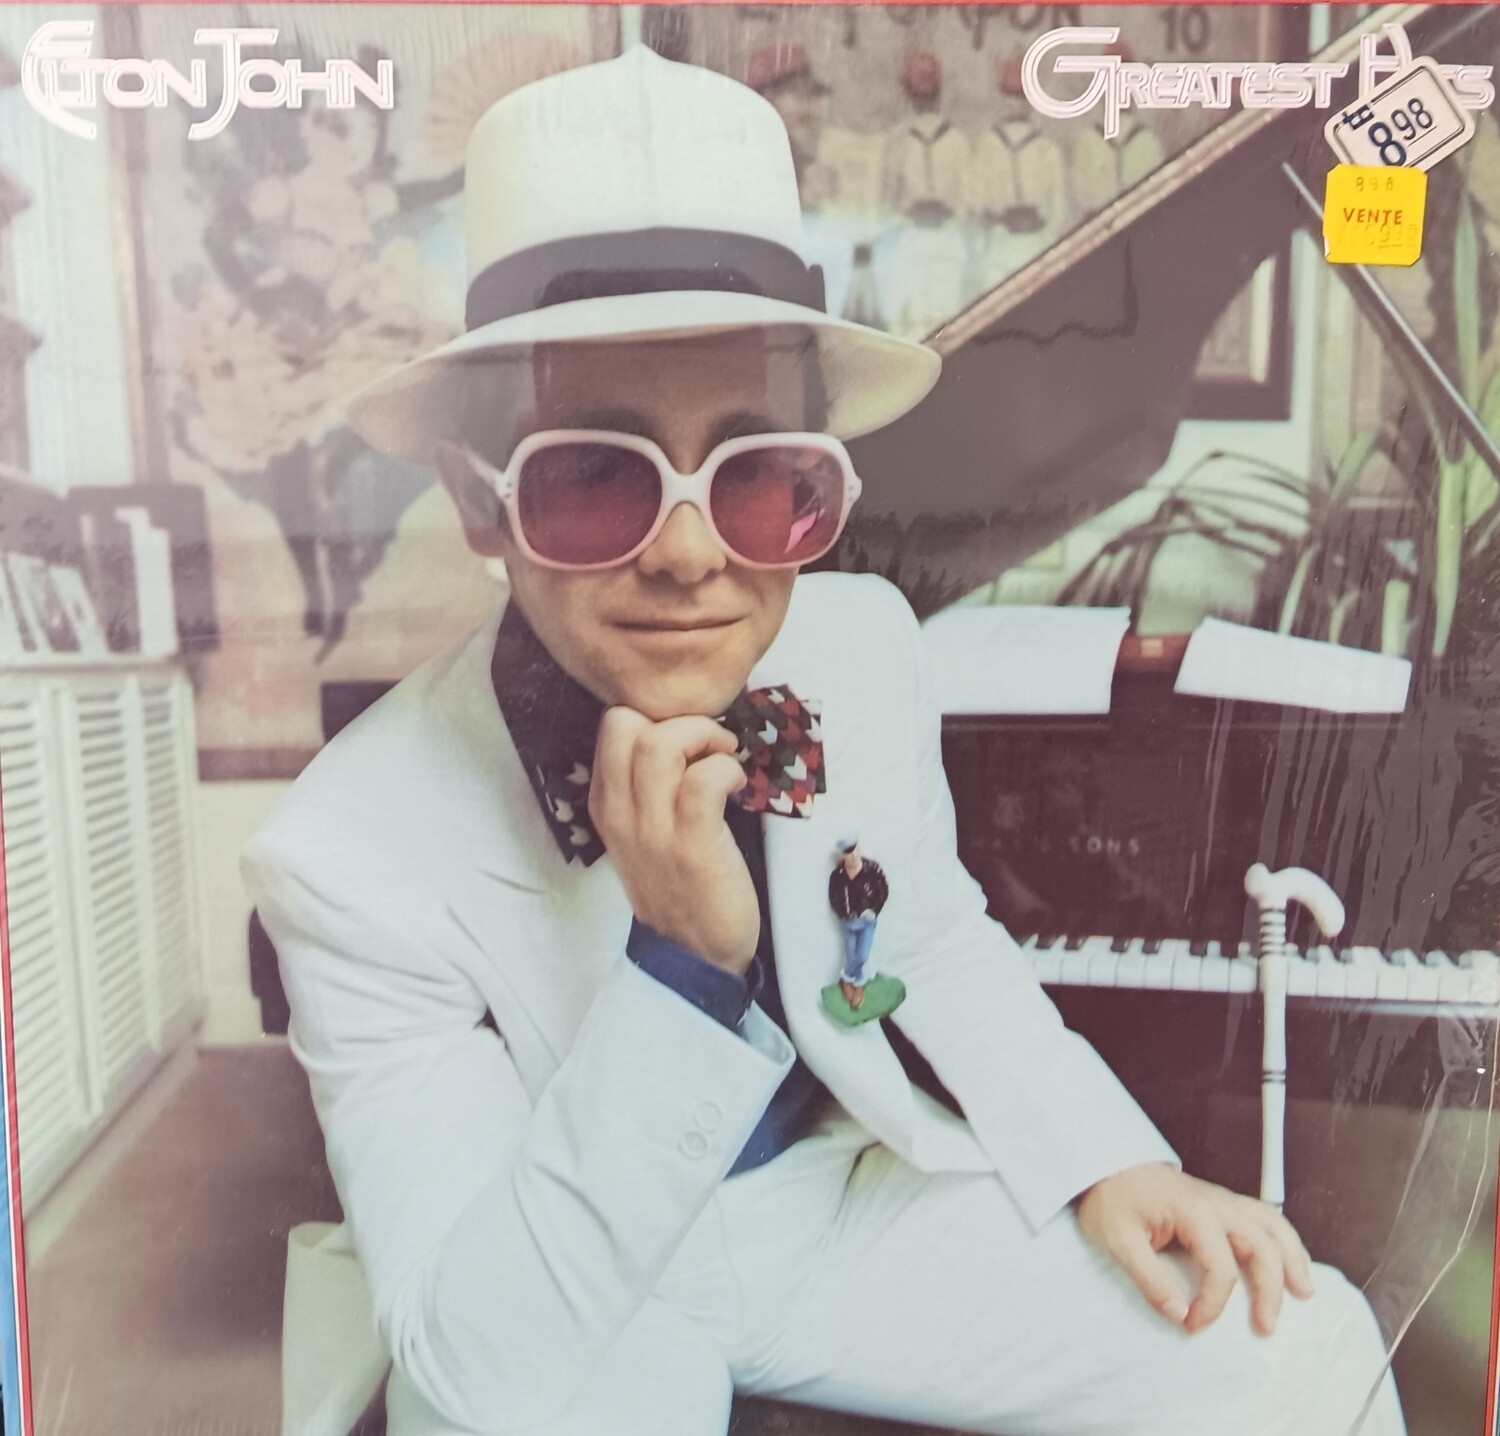 ELTON JOHN - Greatest Hits